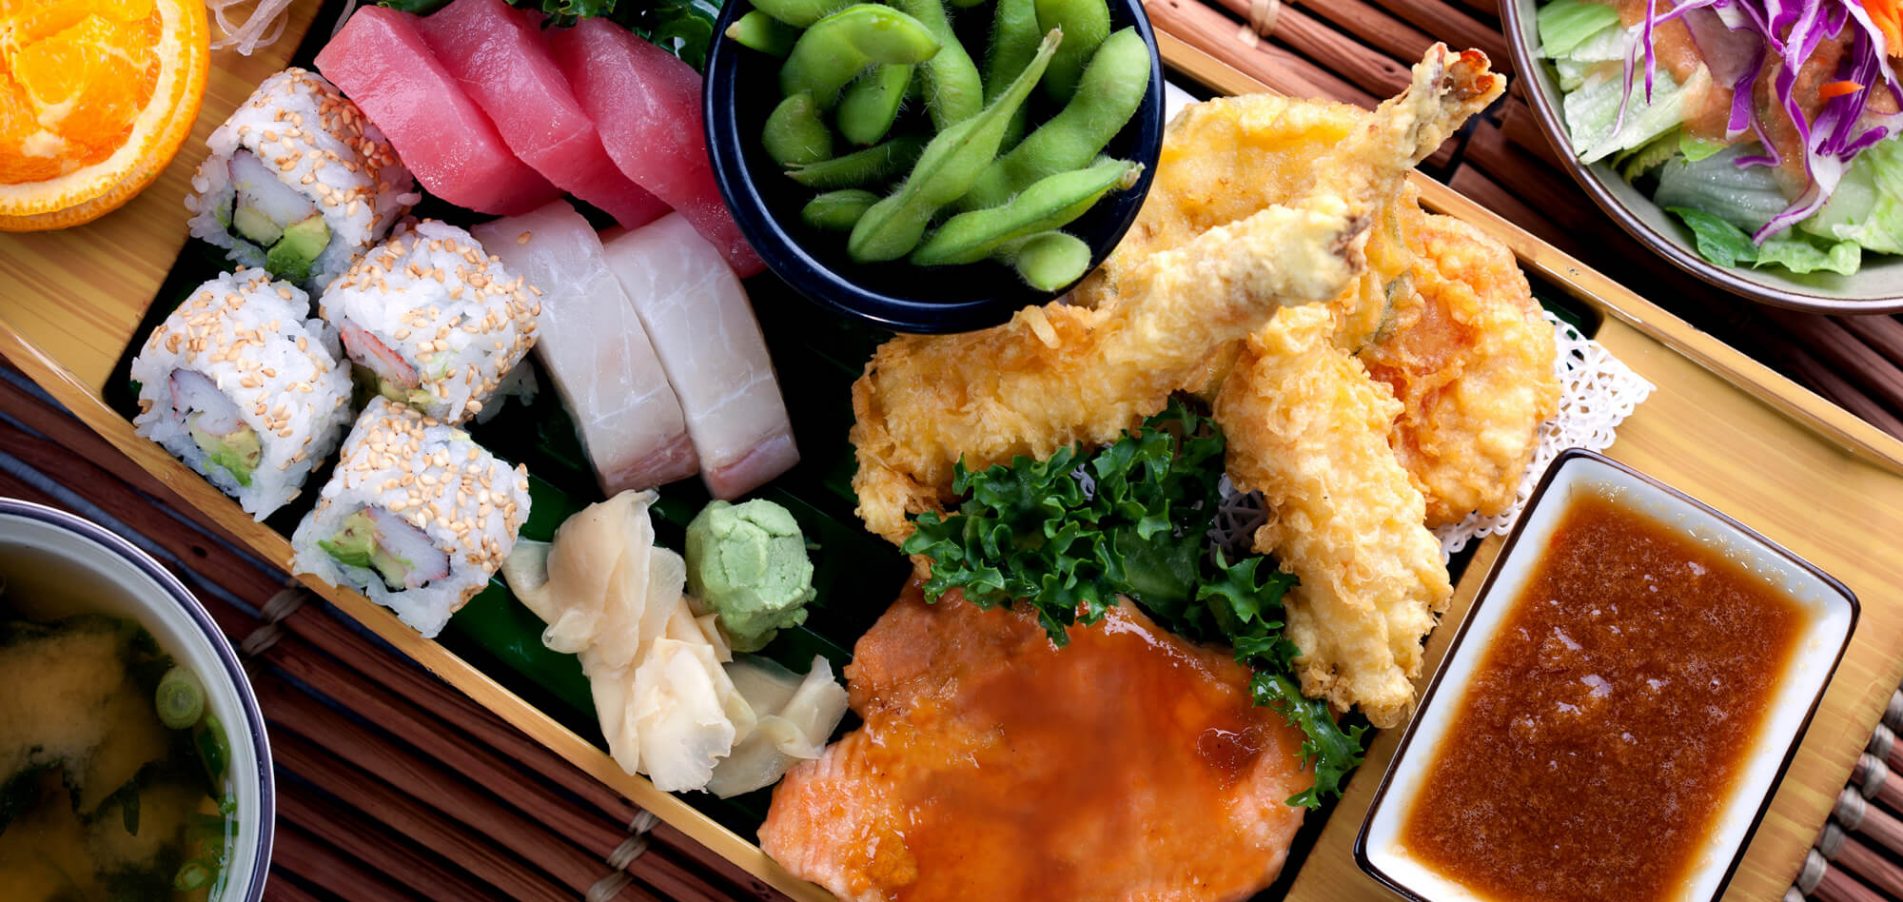 samurai platter sushi boy